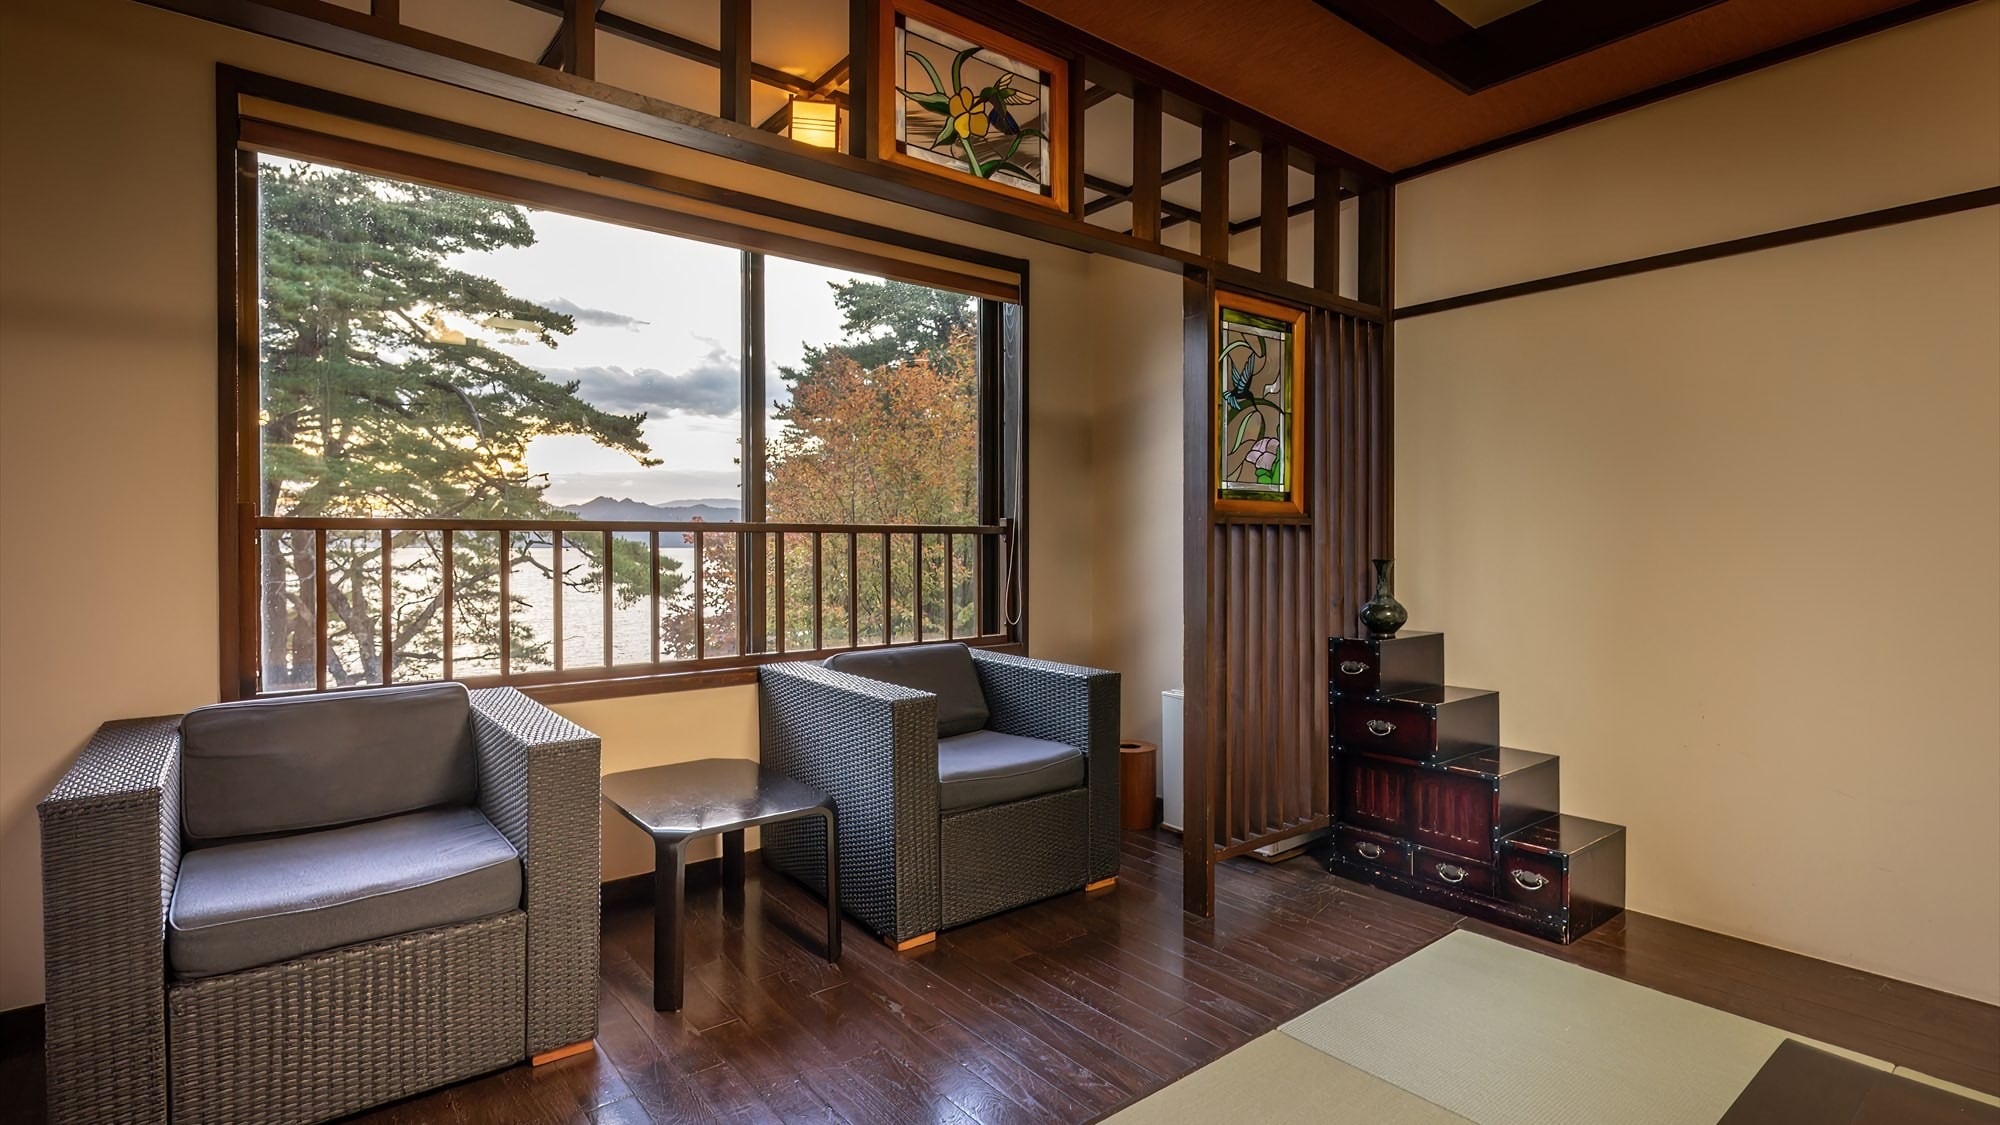 ■Japanese-style room with a wide veranda overlooking Lake Tazawa